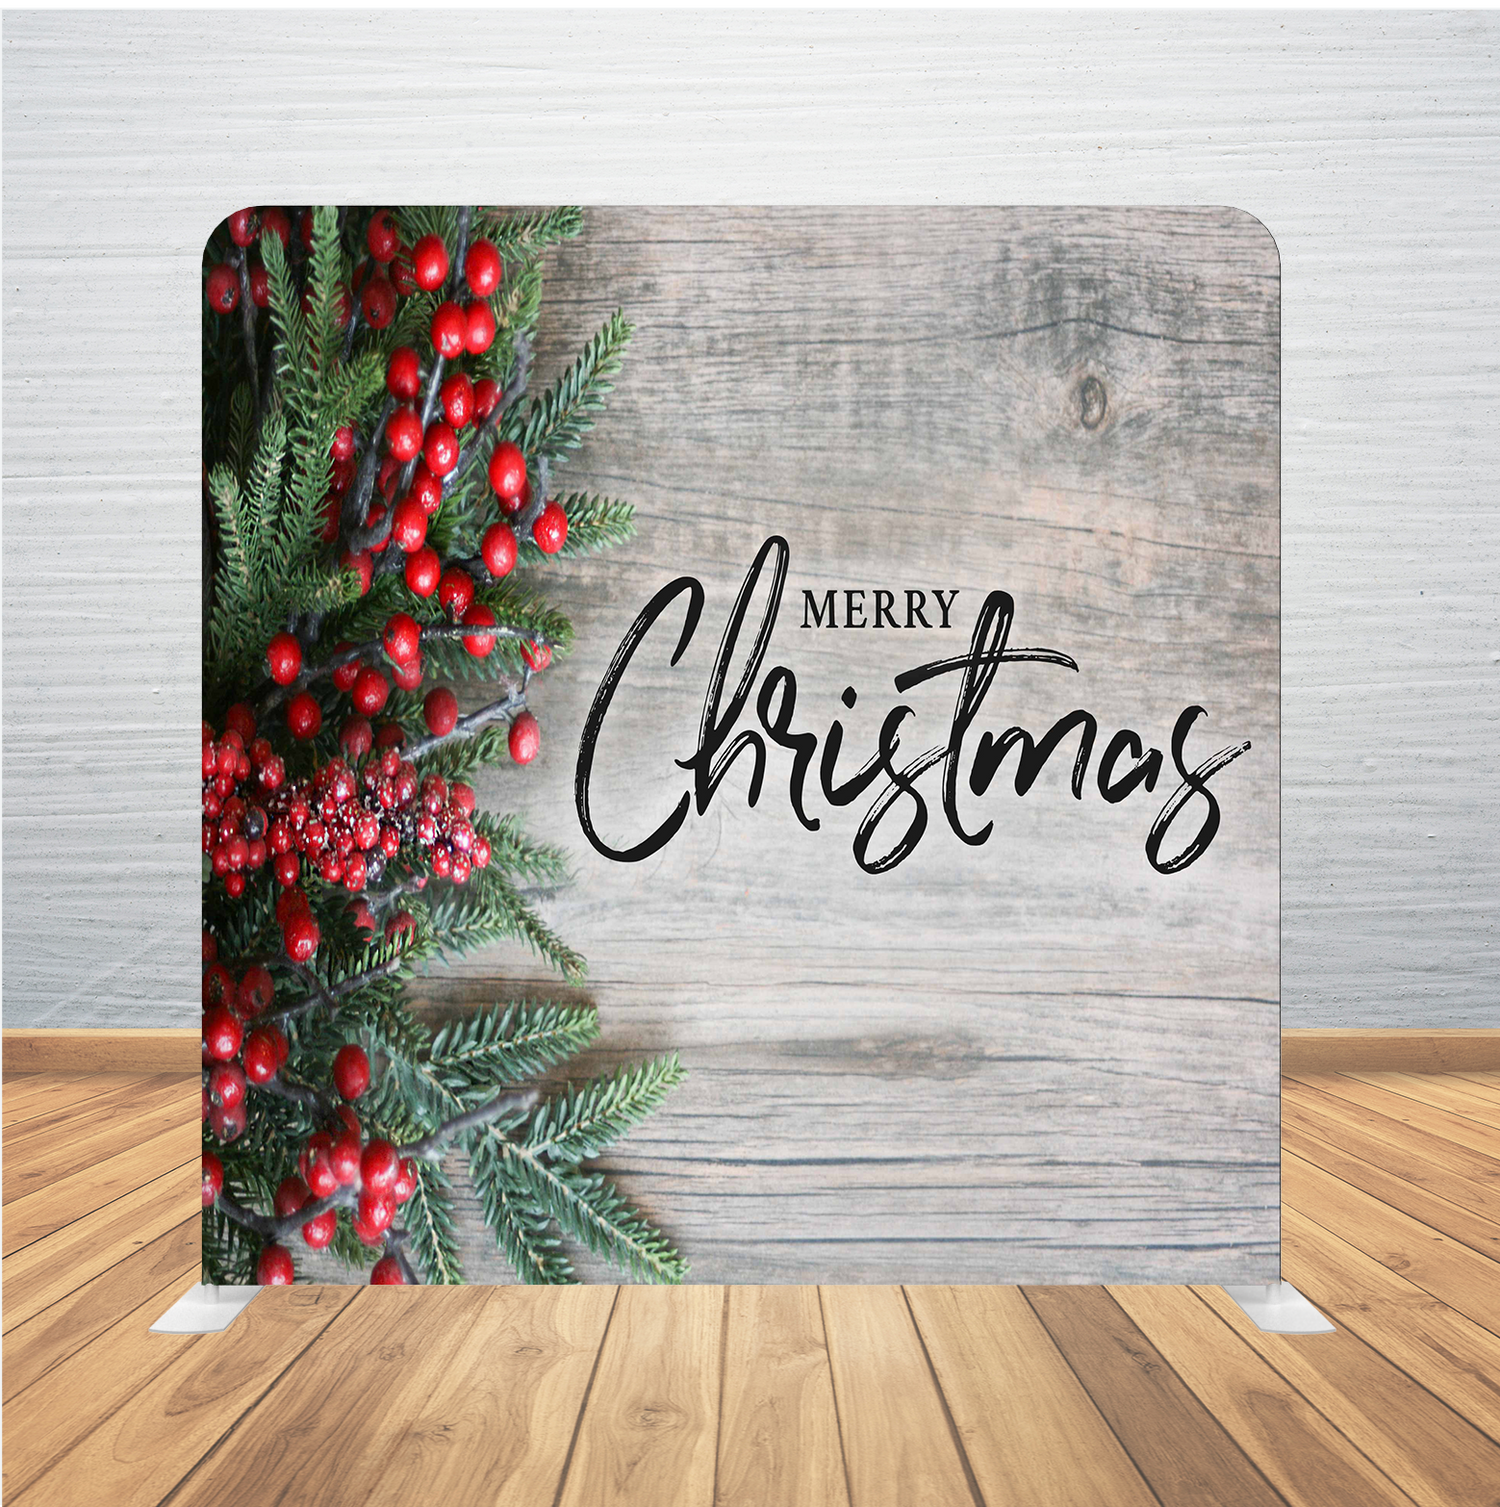 8X8 Pillowcase Tension Backdrop- Merry Christmas Pine Tree